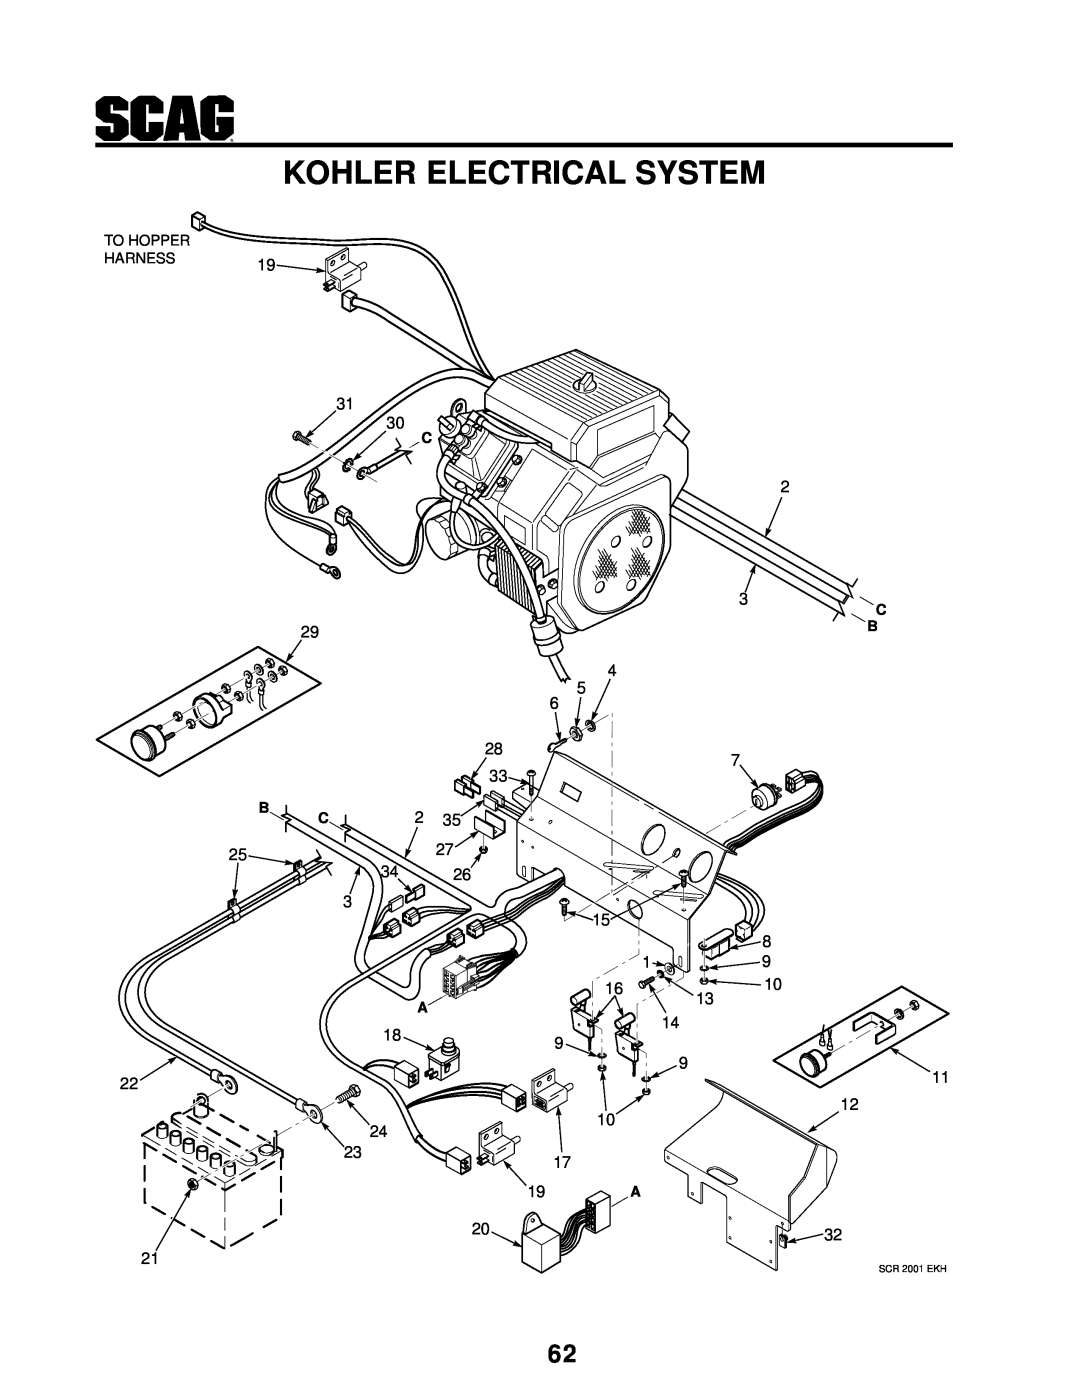 MB QUART manual Kohler Electrical System, To Hopper Harness, 19 A, SCR 2001 EKH 